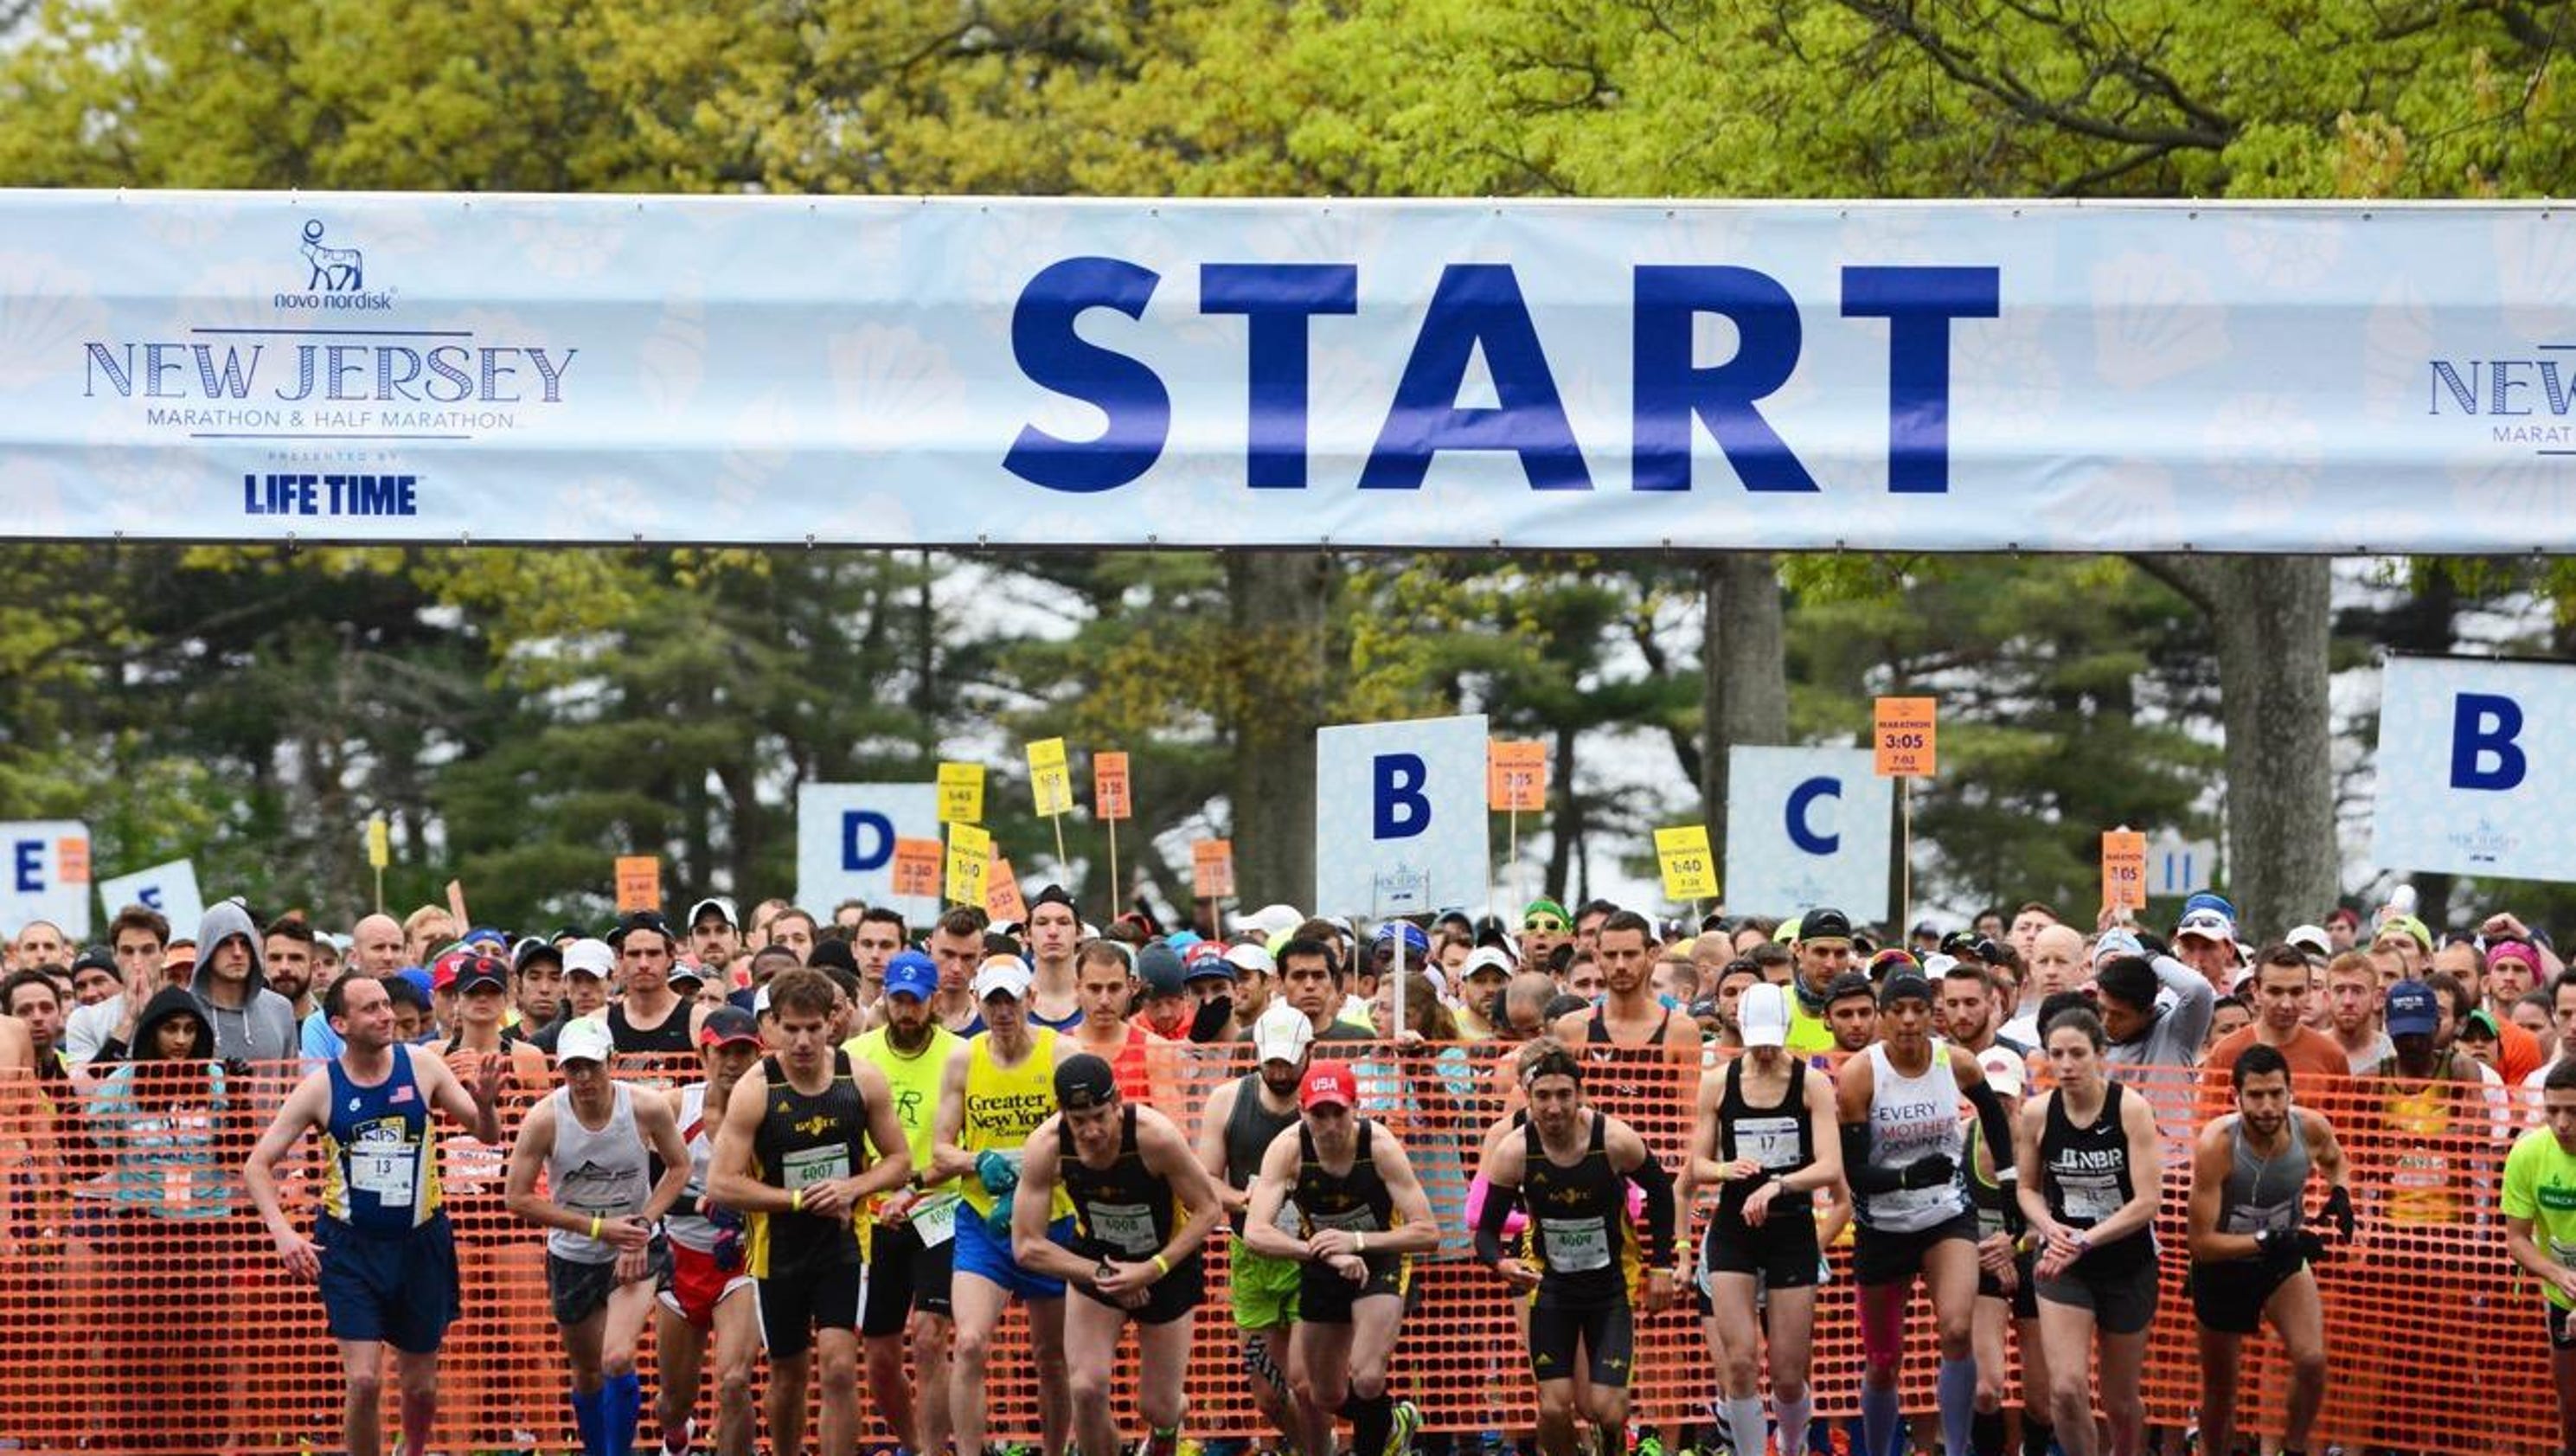 New Jersey Marathon returns this weekend to Jersey Shore